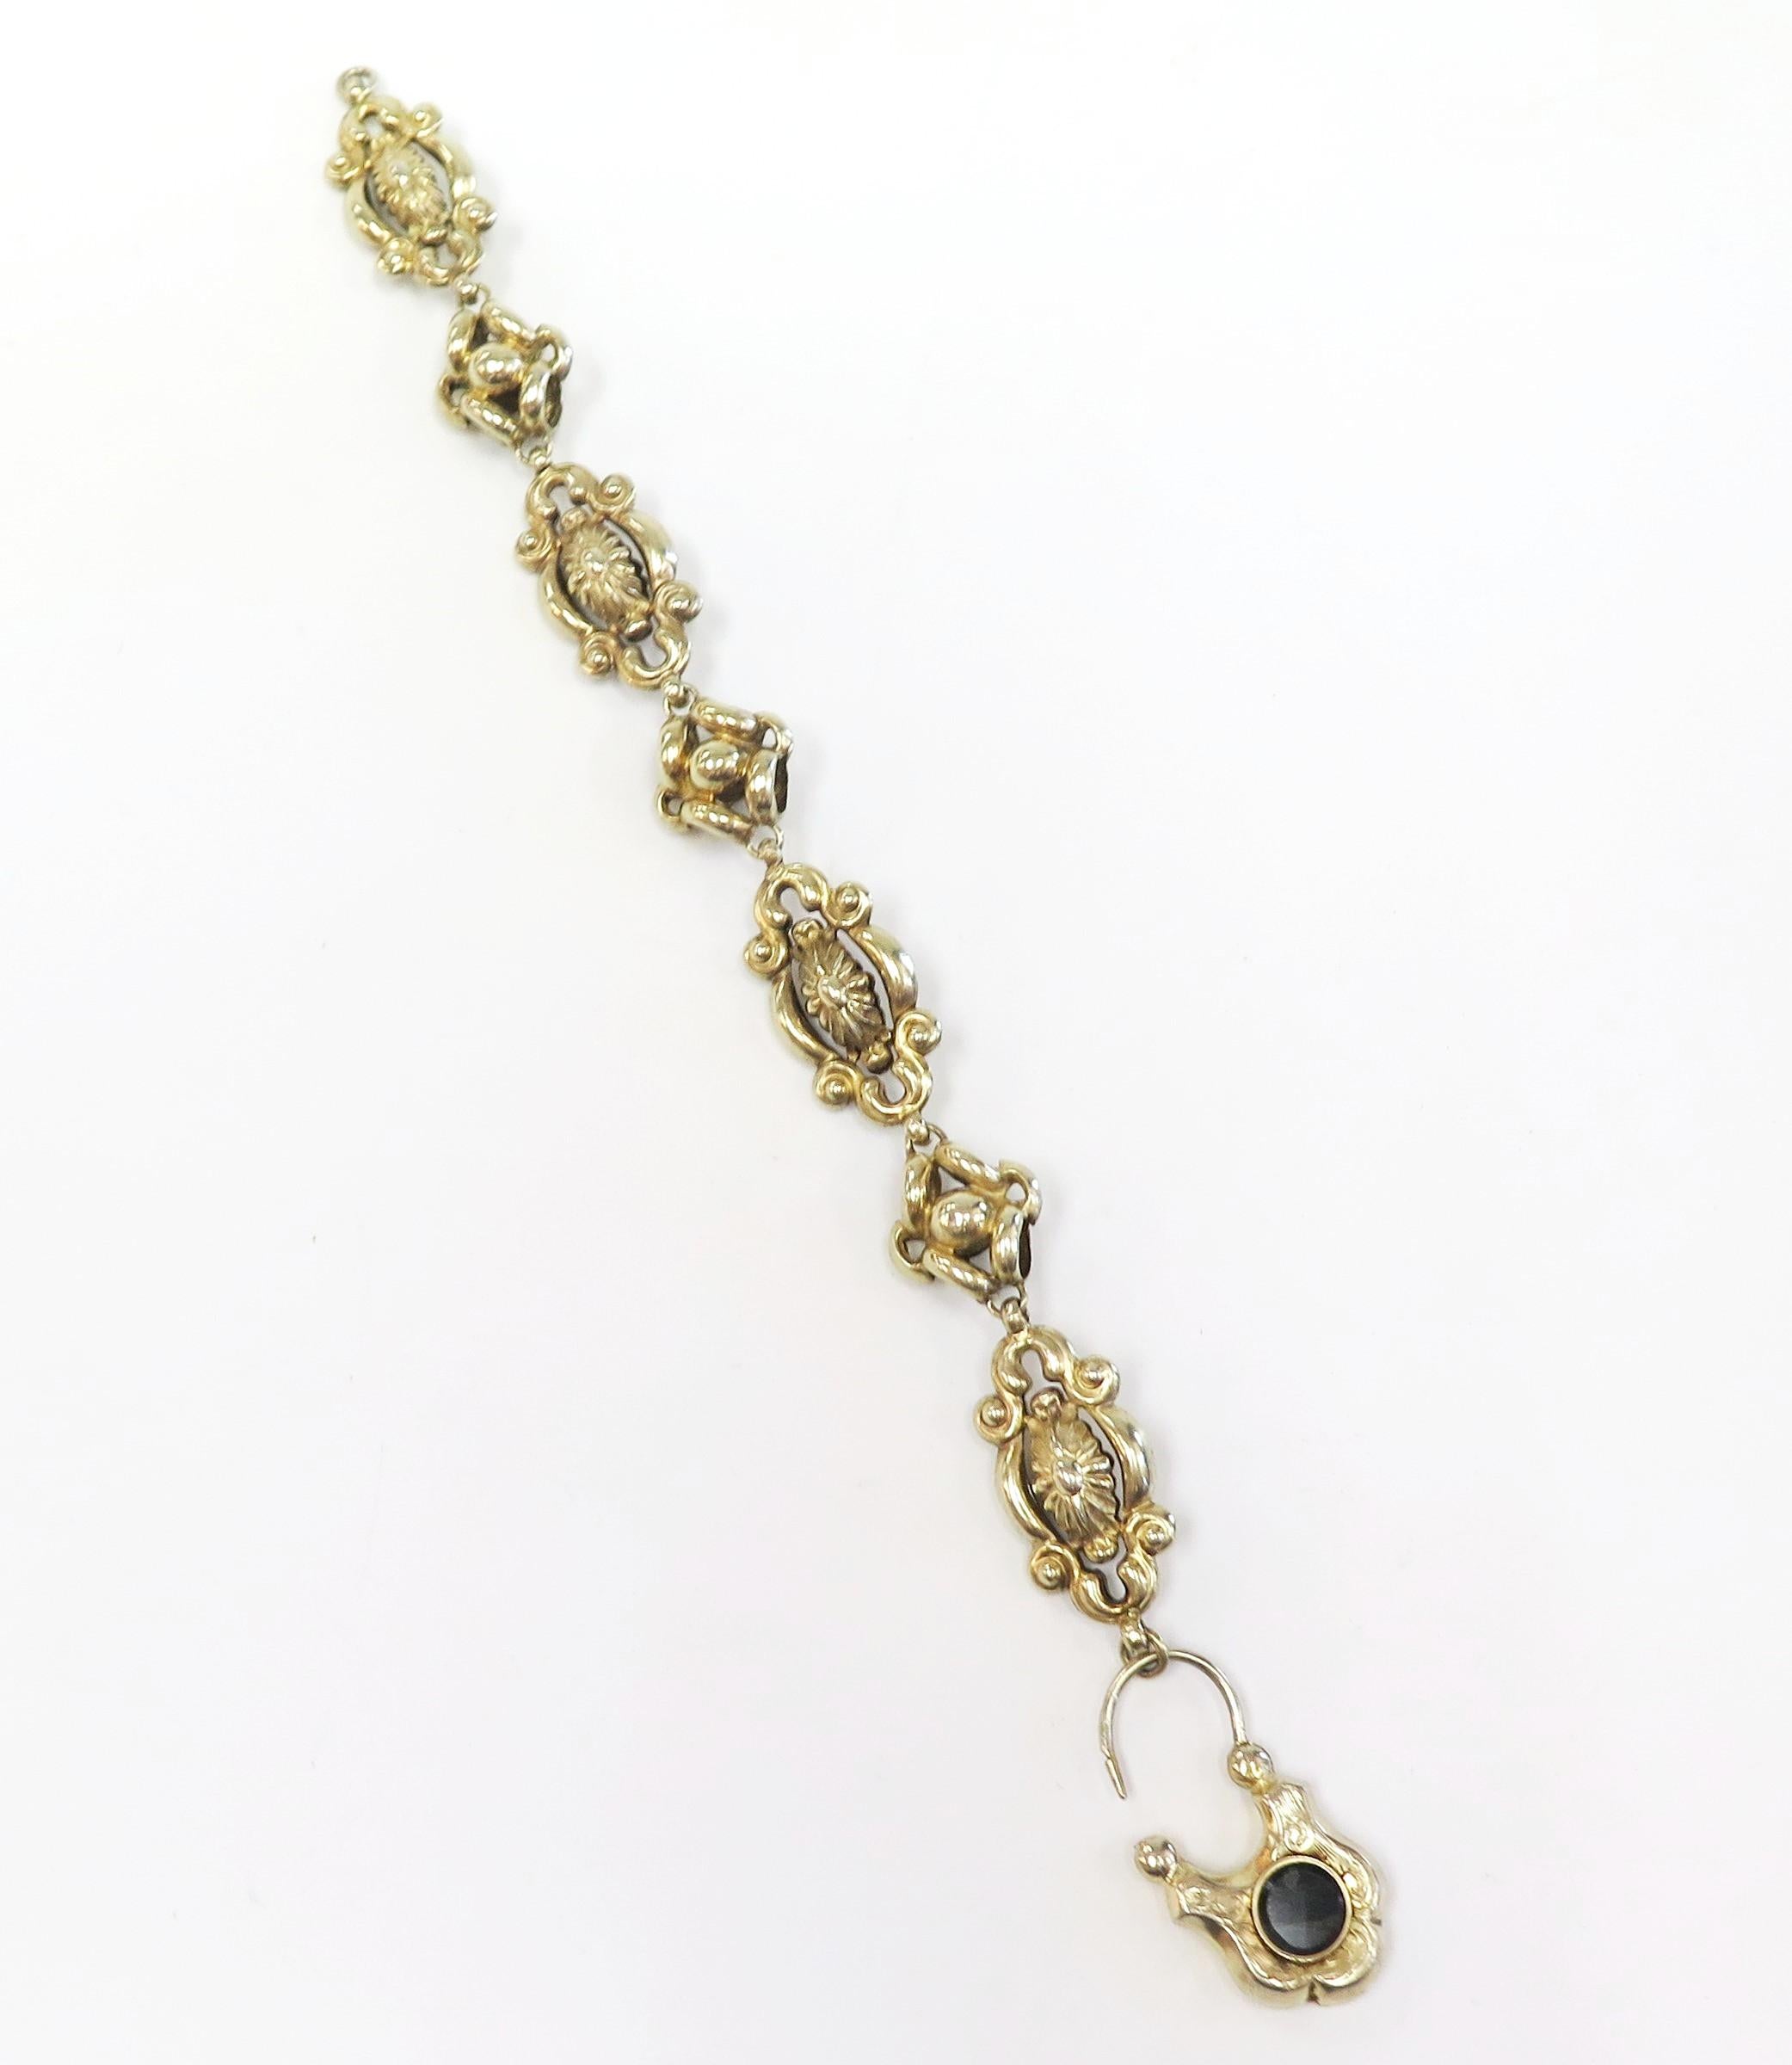 Antique Victorian Mourning Bracelet with Etched Padlock Clasp, 10 Karat For Sale 4